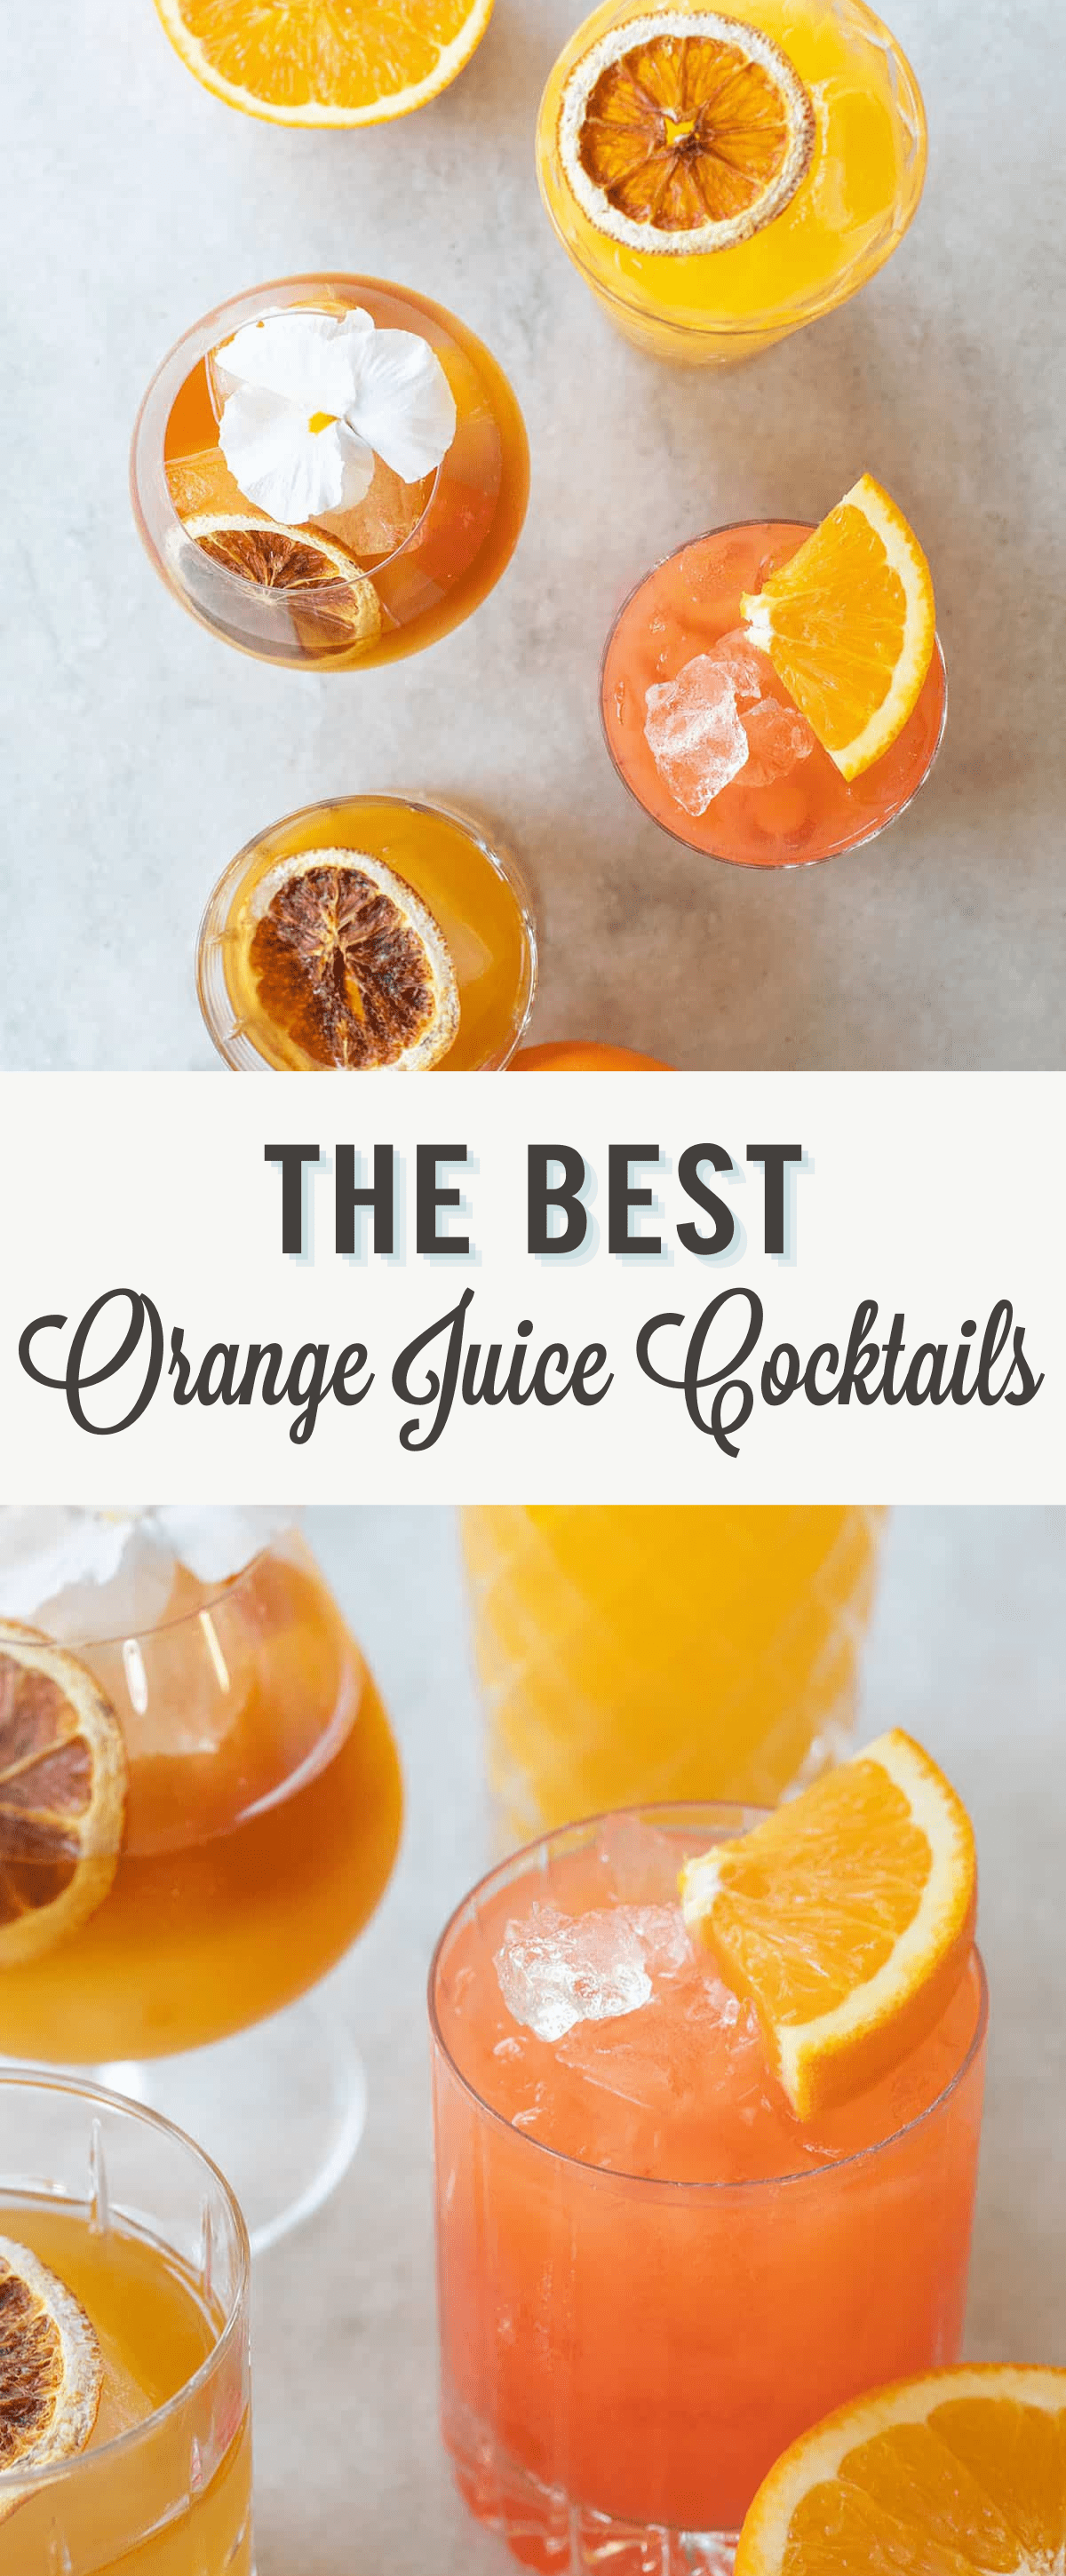 Orange juice cocktail recipes.